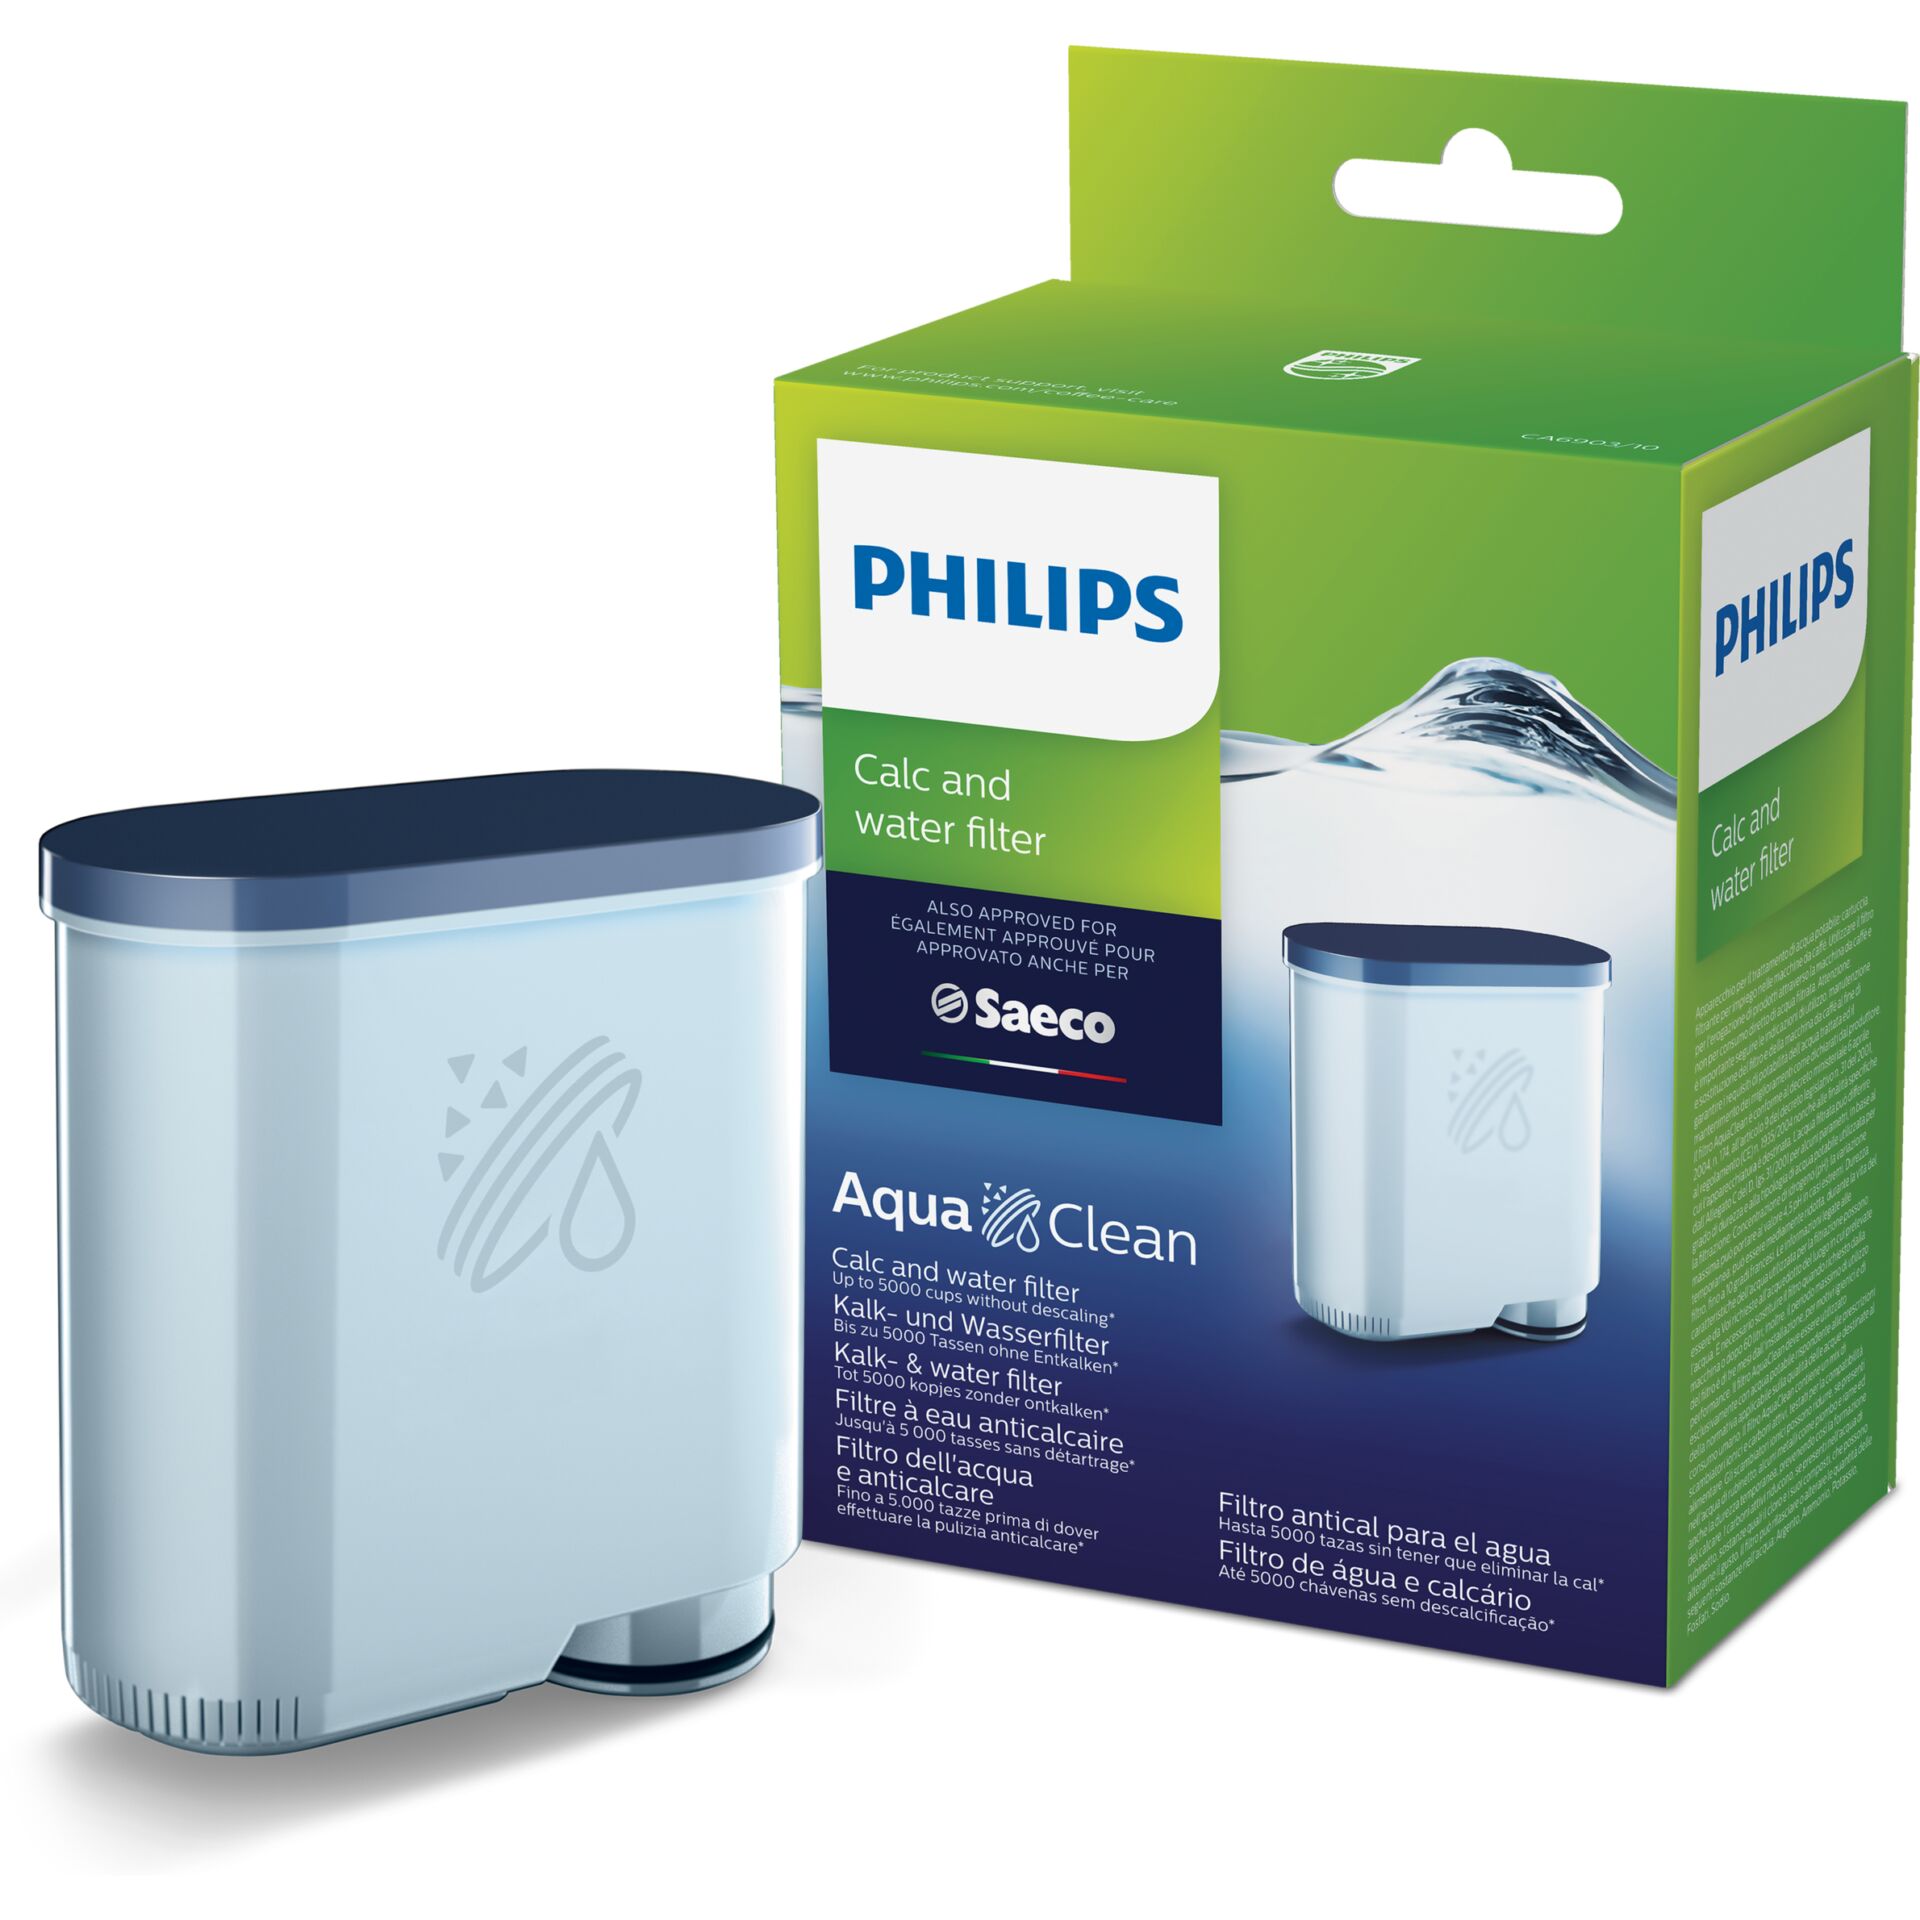 Philips AquaClean Vand filter